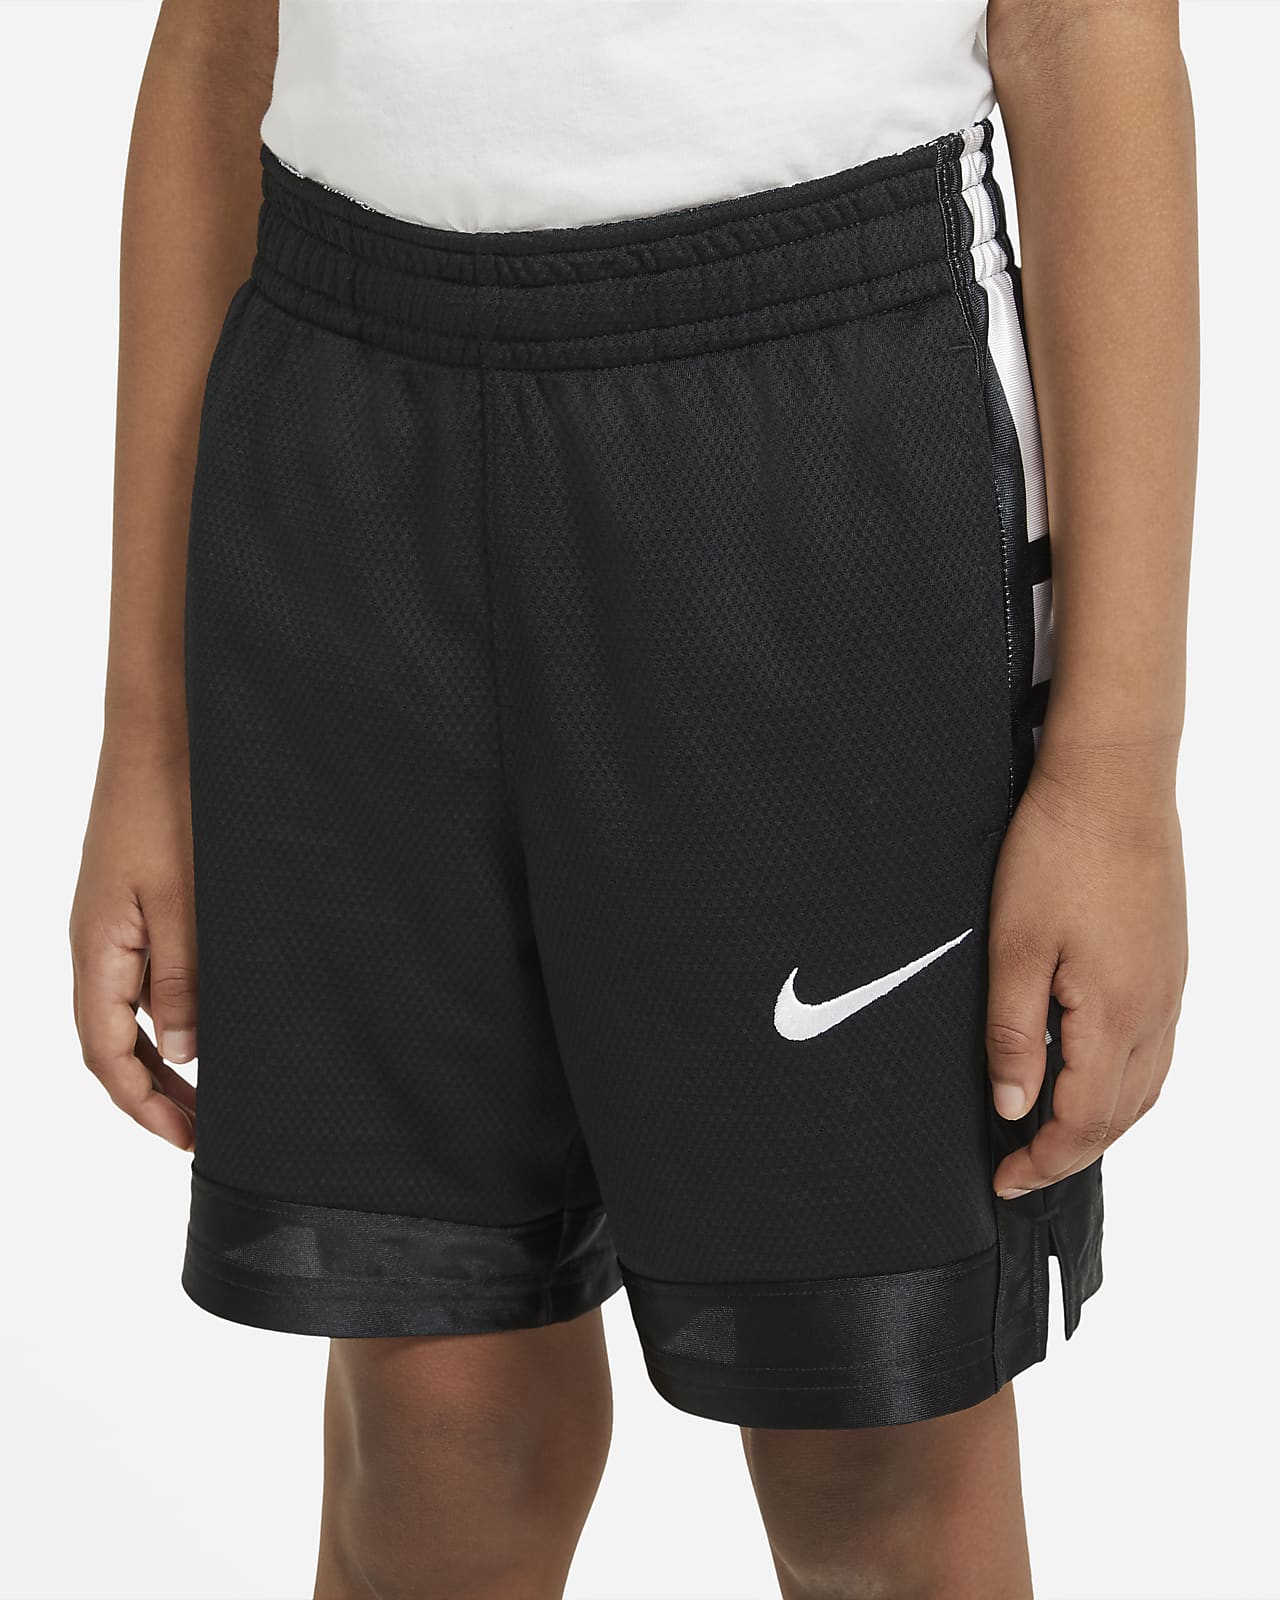 Nike Dri-Fit Elite Basketball Shorts - Boys' L Black/White